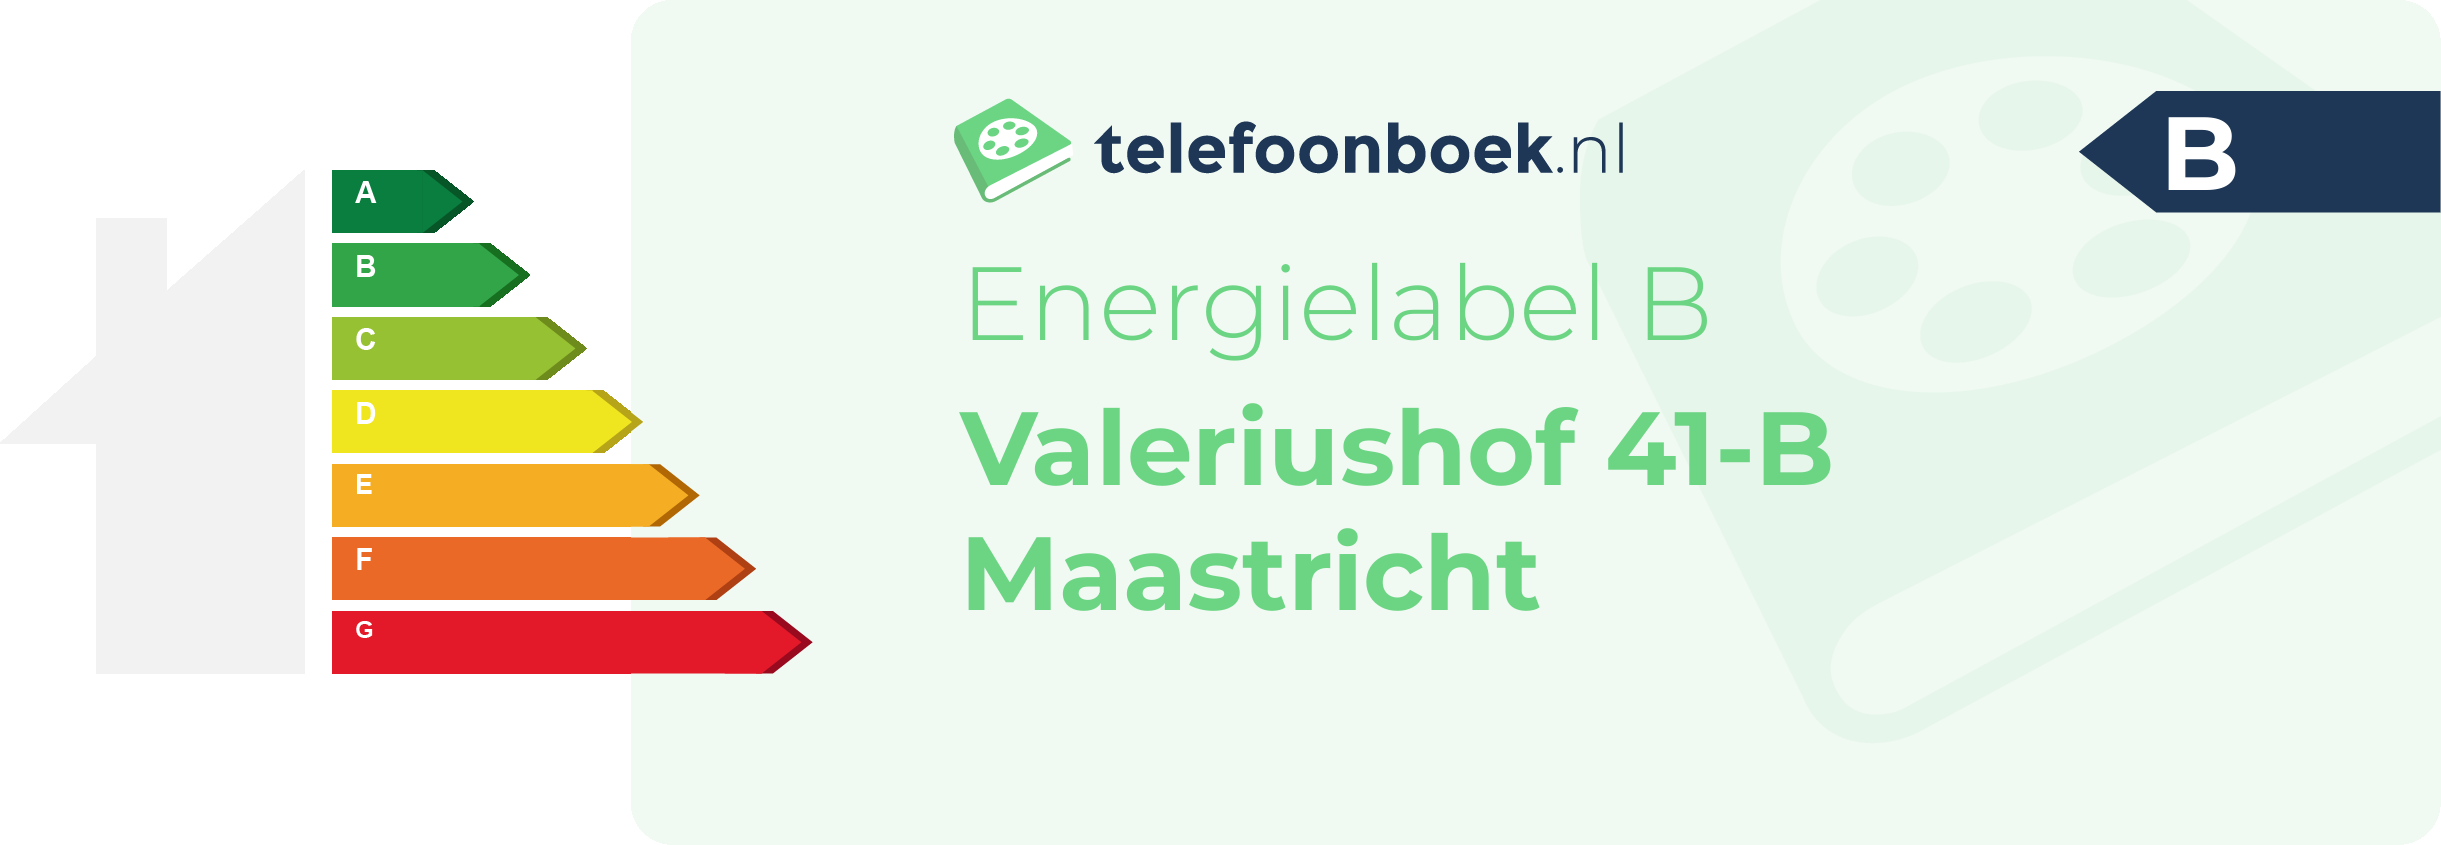 Energielabel Valeriushof 41-B Maastricht